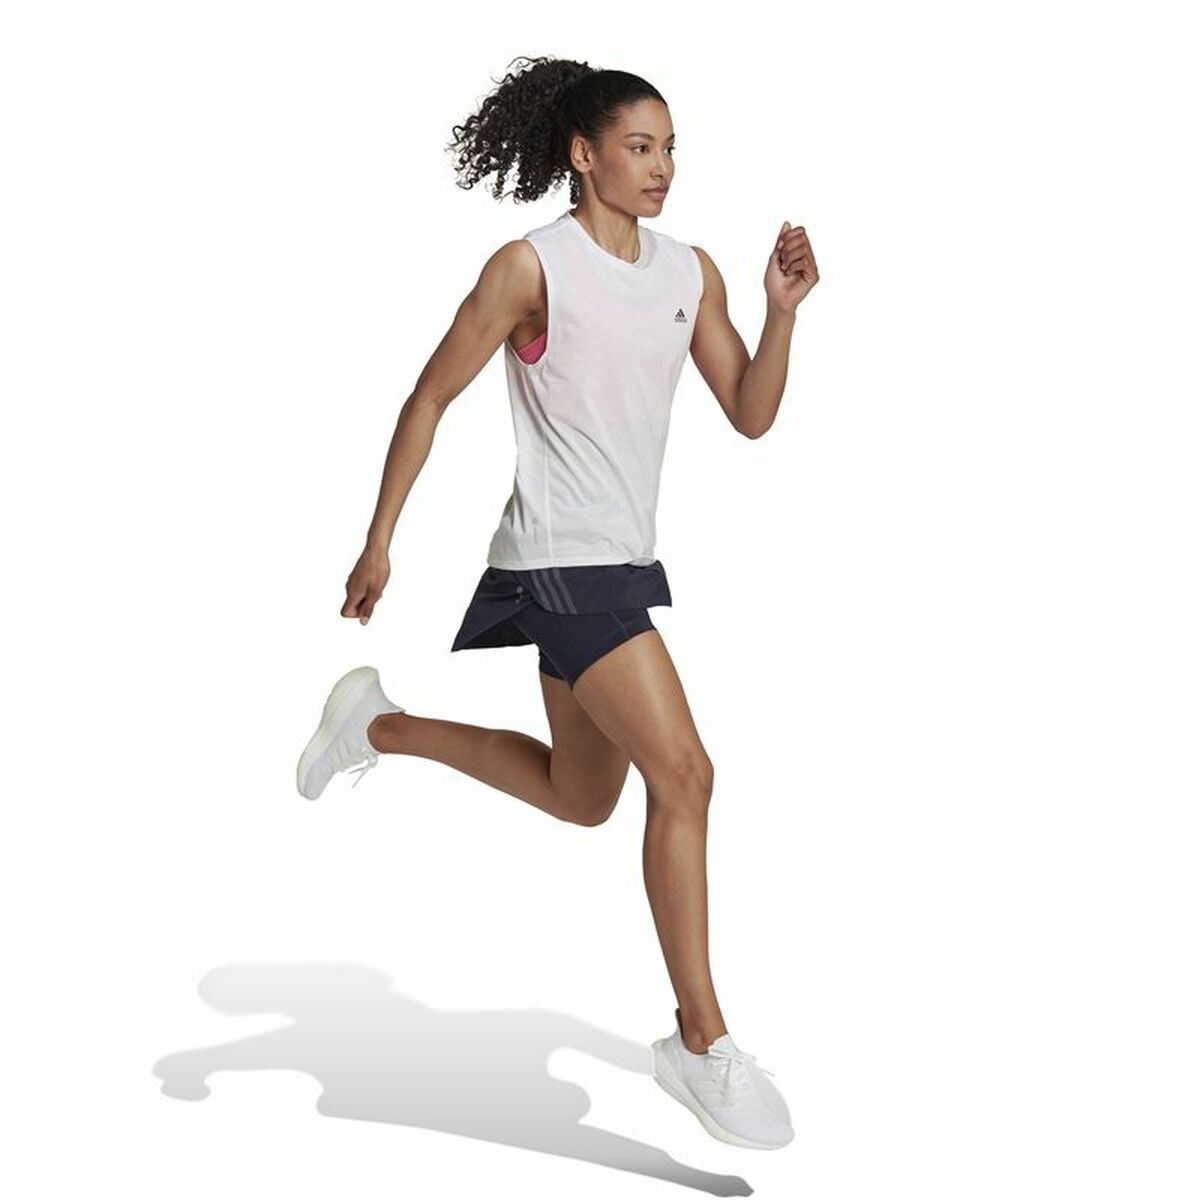 Women's Sleeveless T-shirt Adidas Muscle Run Icons White